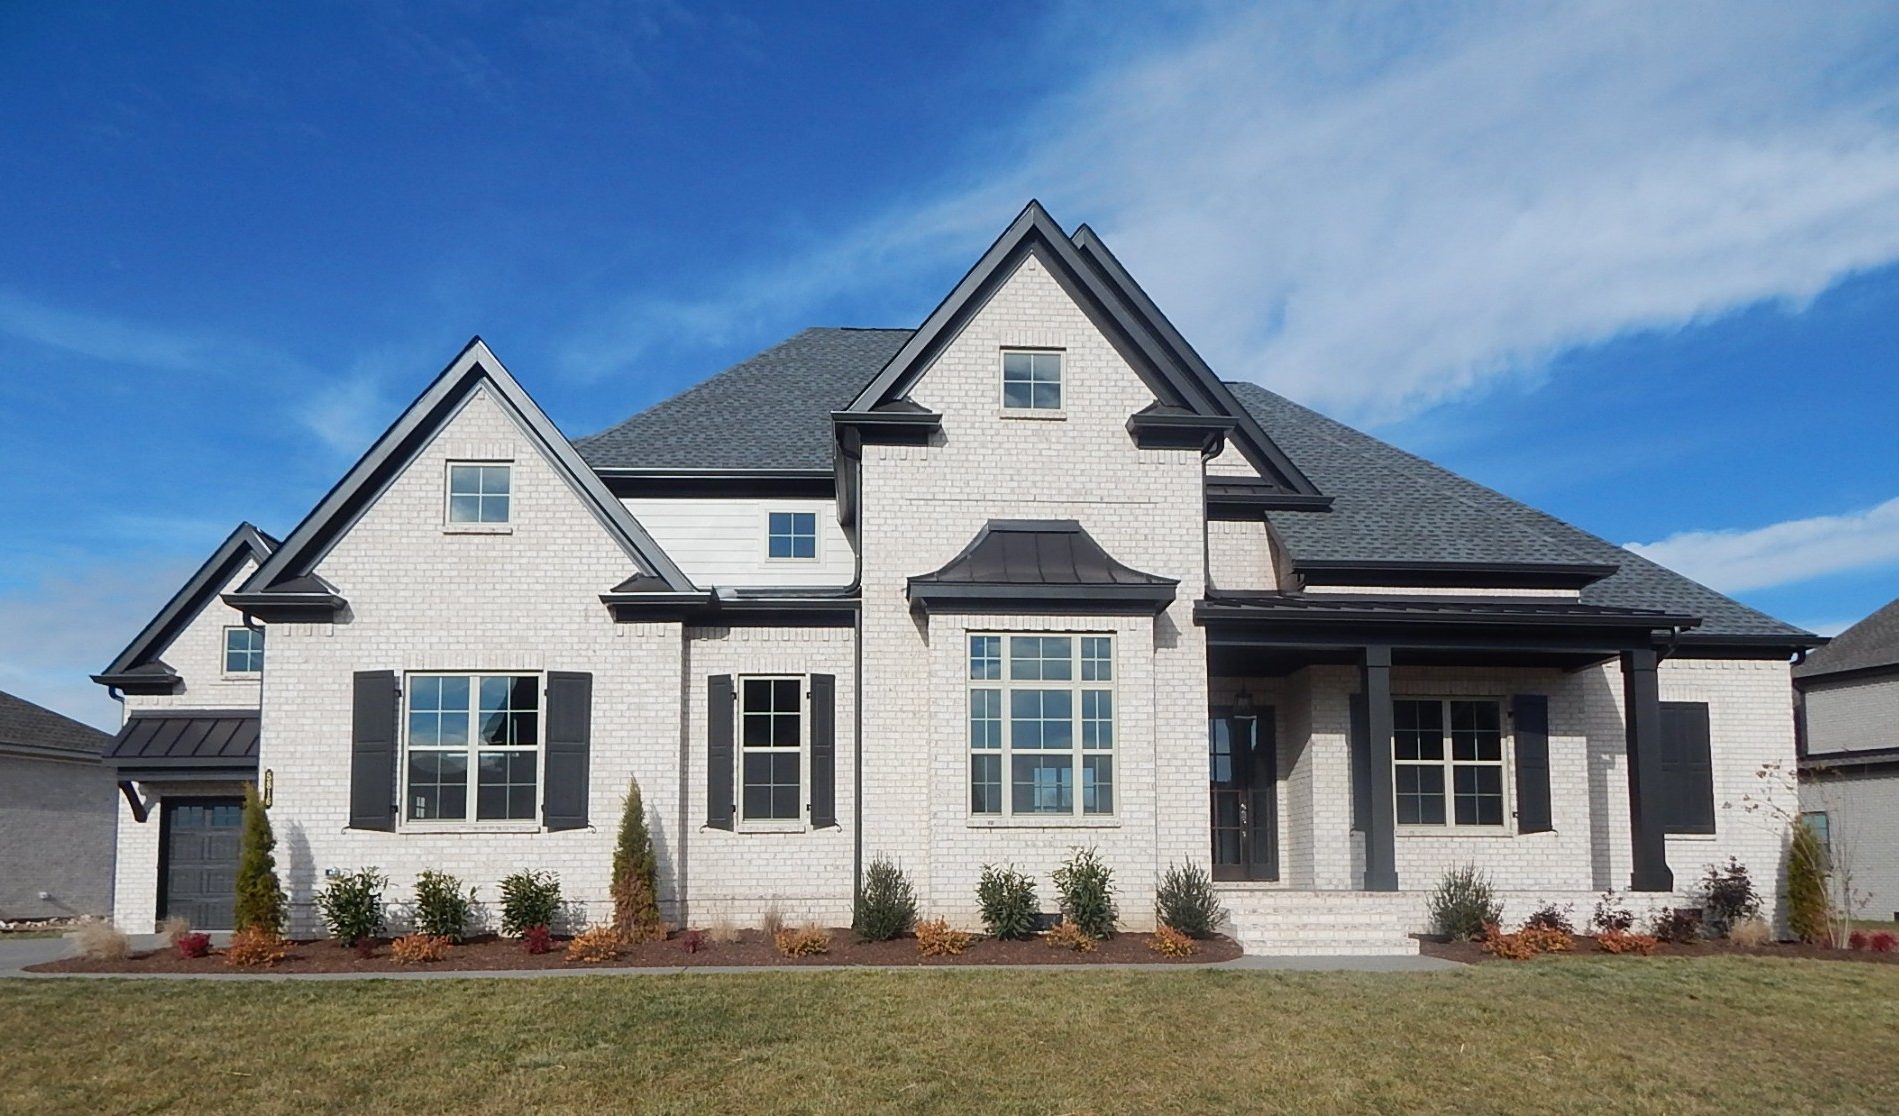 St. Andrews III - Premier, High-end home builders for luxury homes - luxury home builder | Nashville, TN